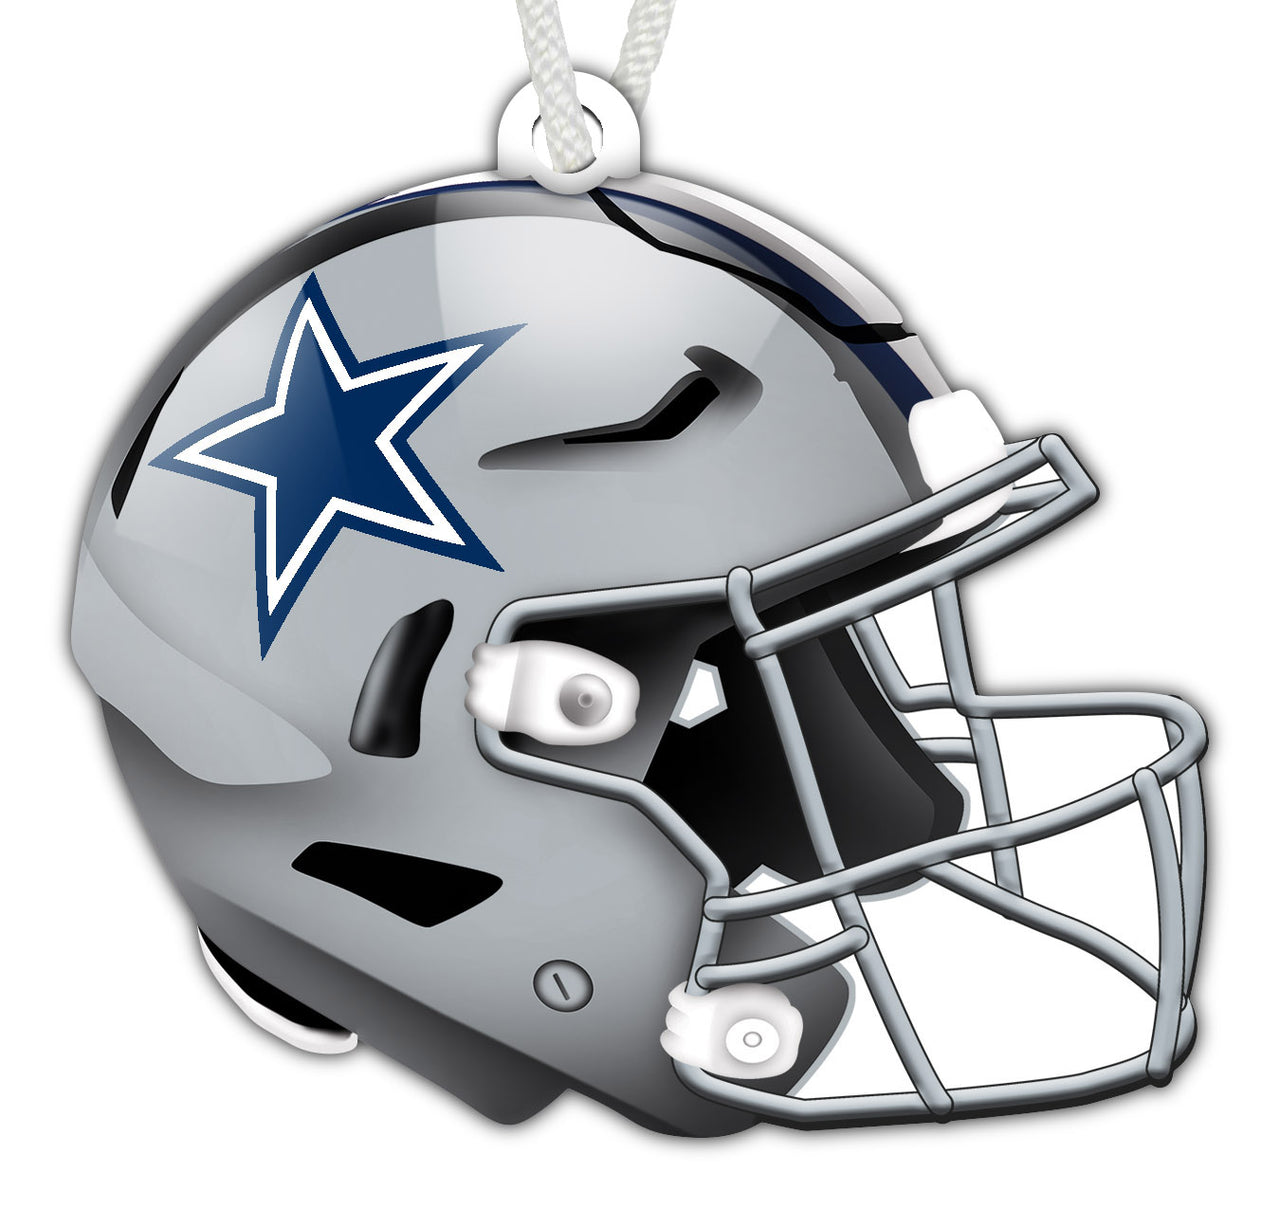 Dallas Cowboys Wooden Helmet Ornament - Dynasty Sports & Framing 